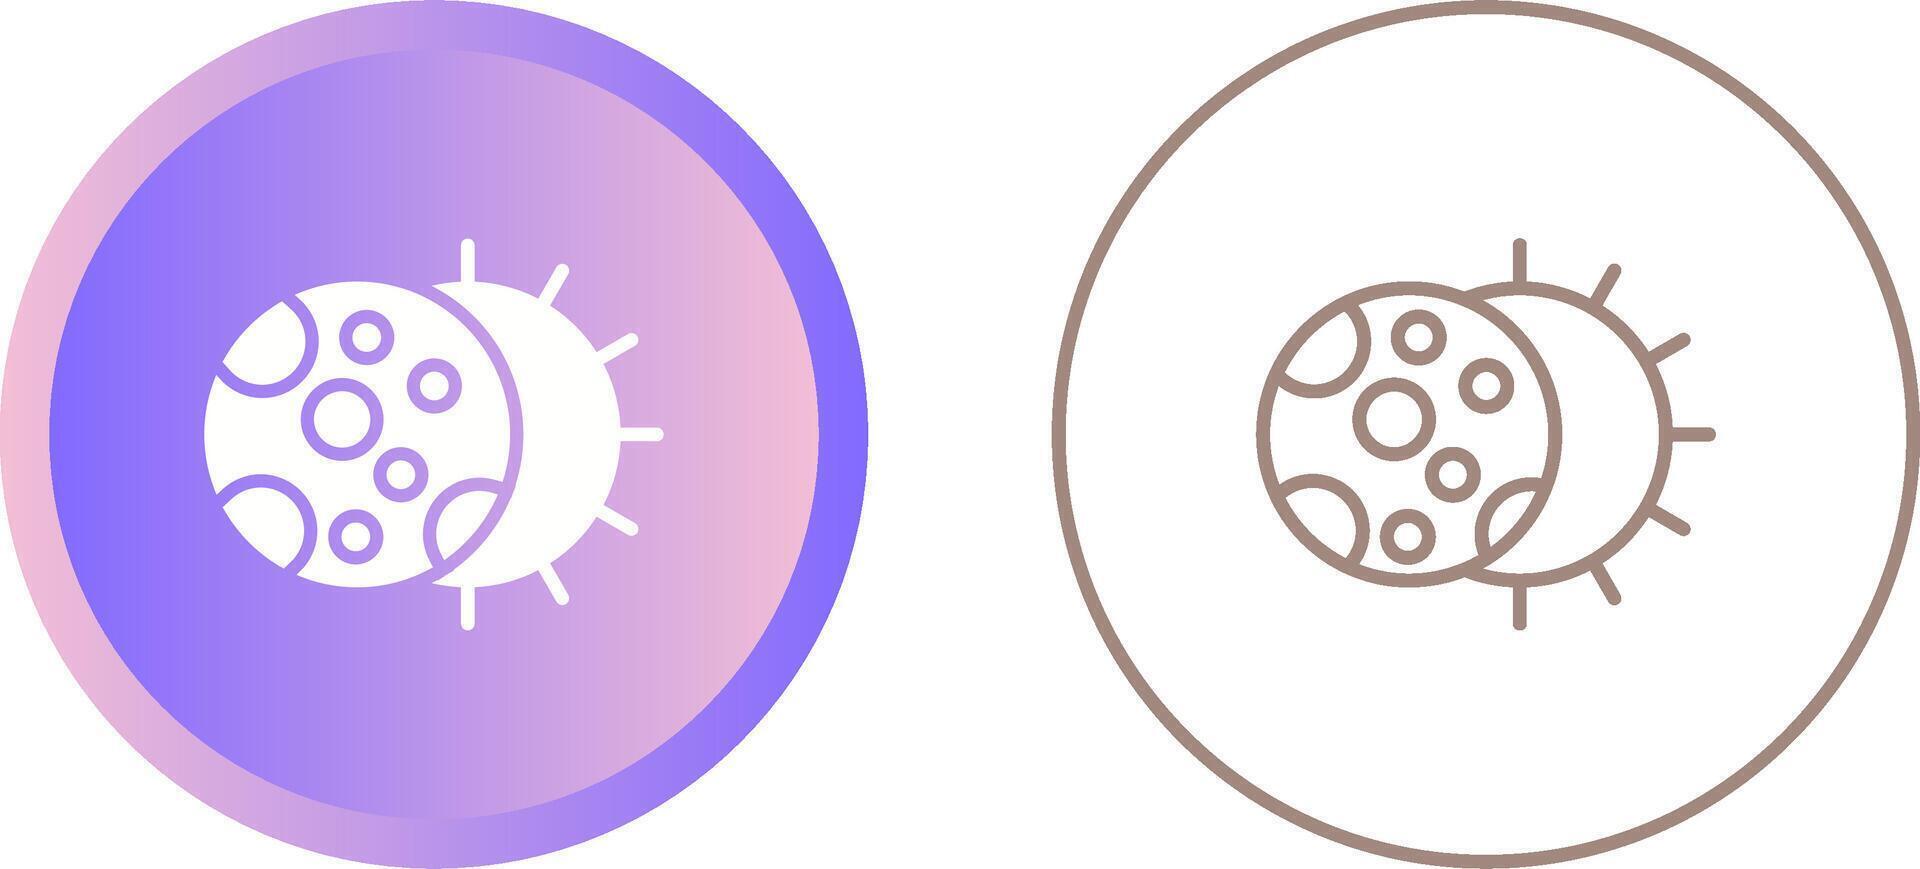 Eclipse Vector Icon